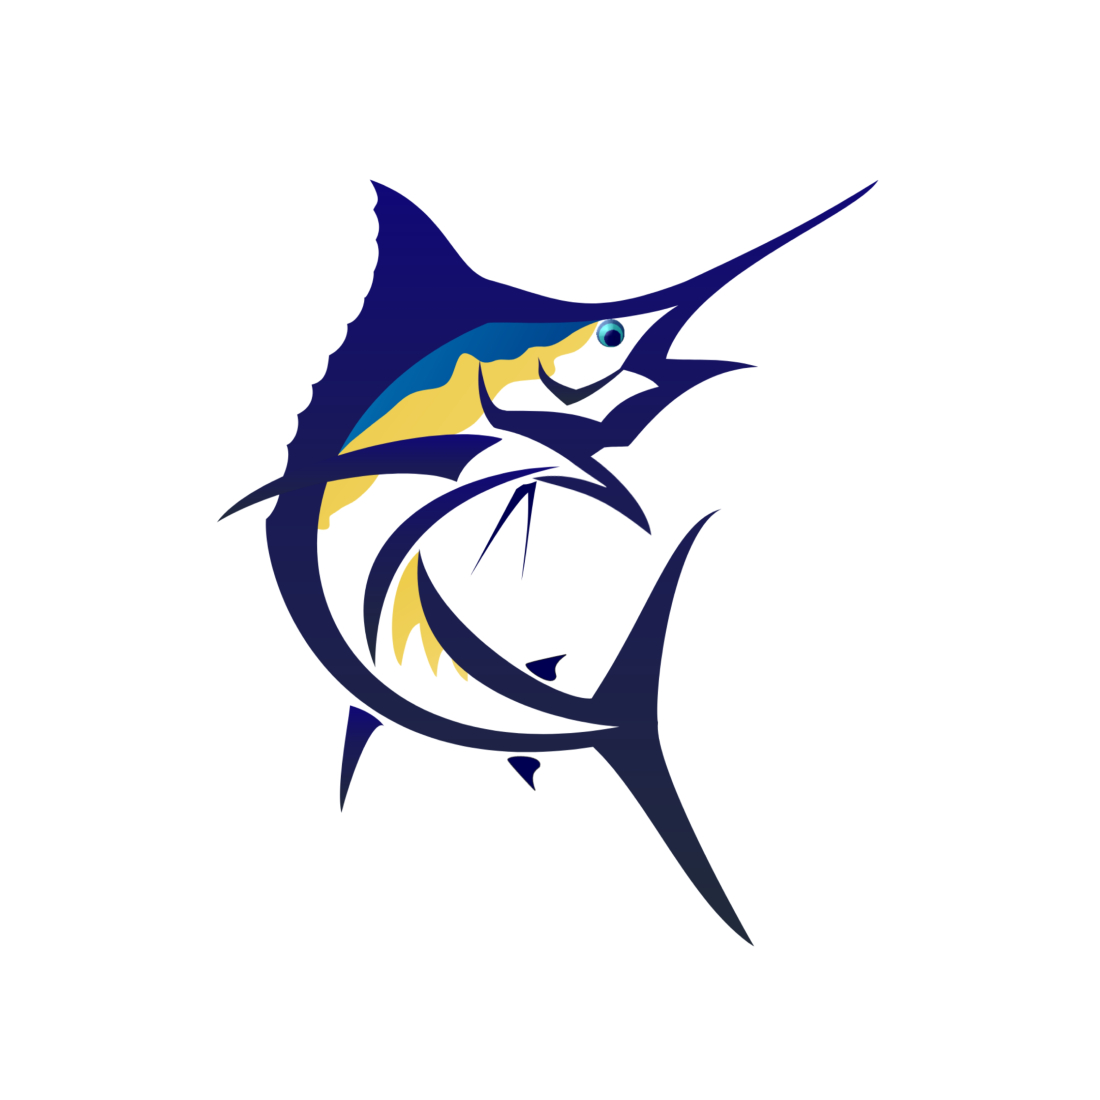 Marlin Fish Logo Design - MasterBundles